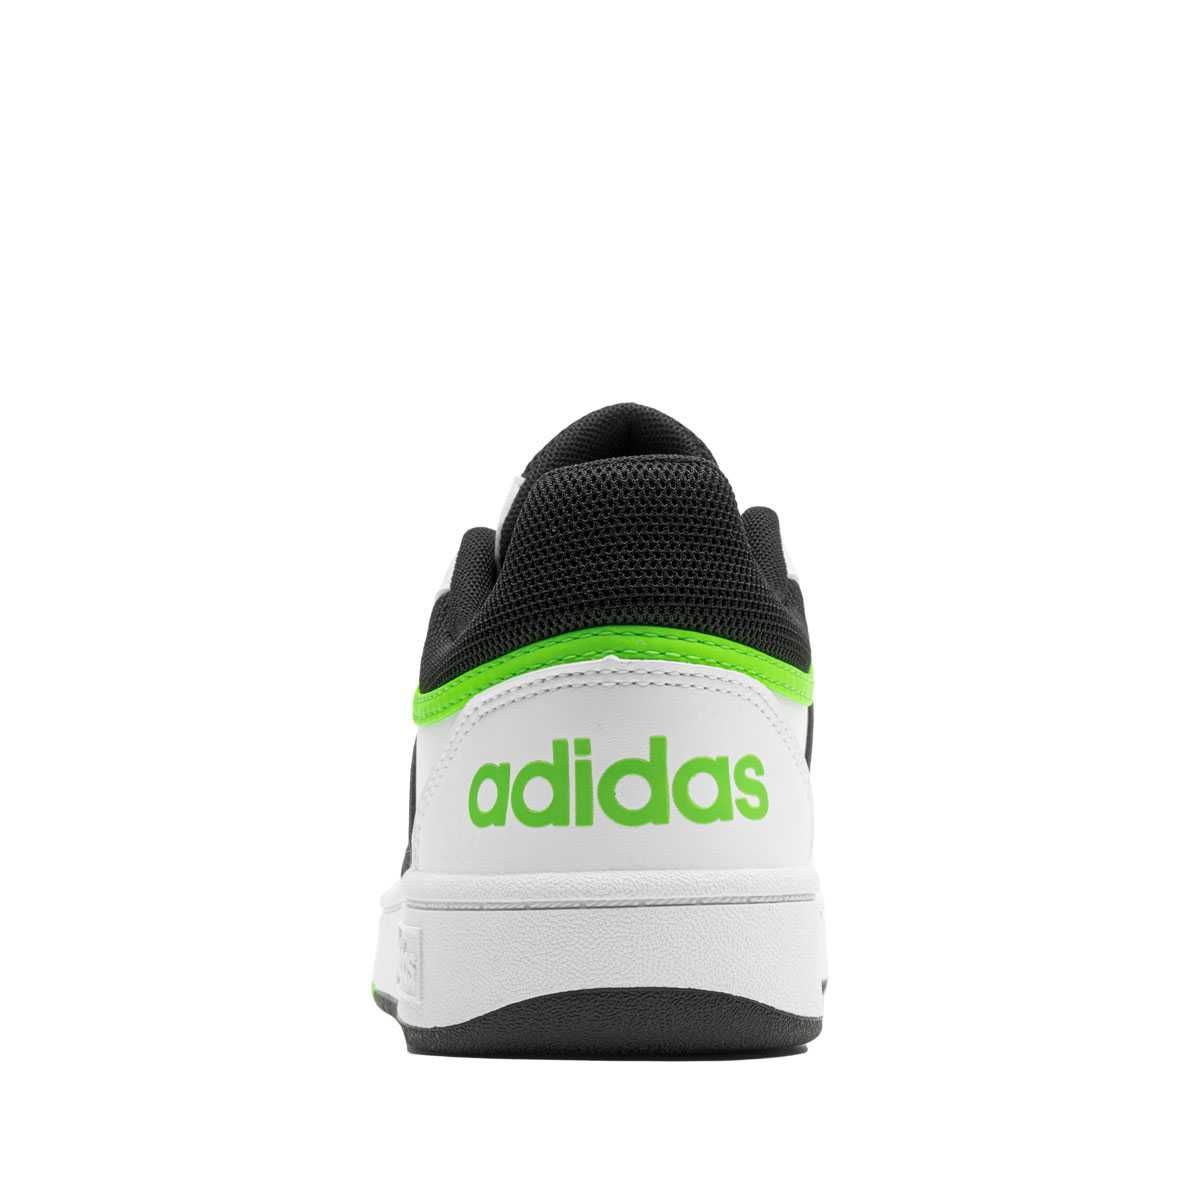 Adidas - Hoops 3.0 №38 Оригинал Код 707